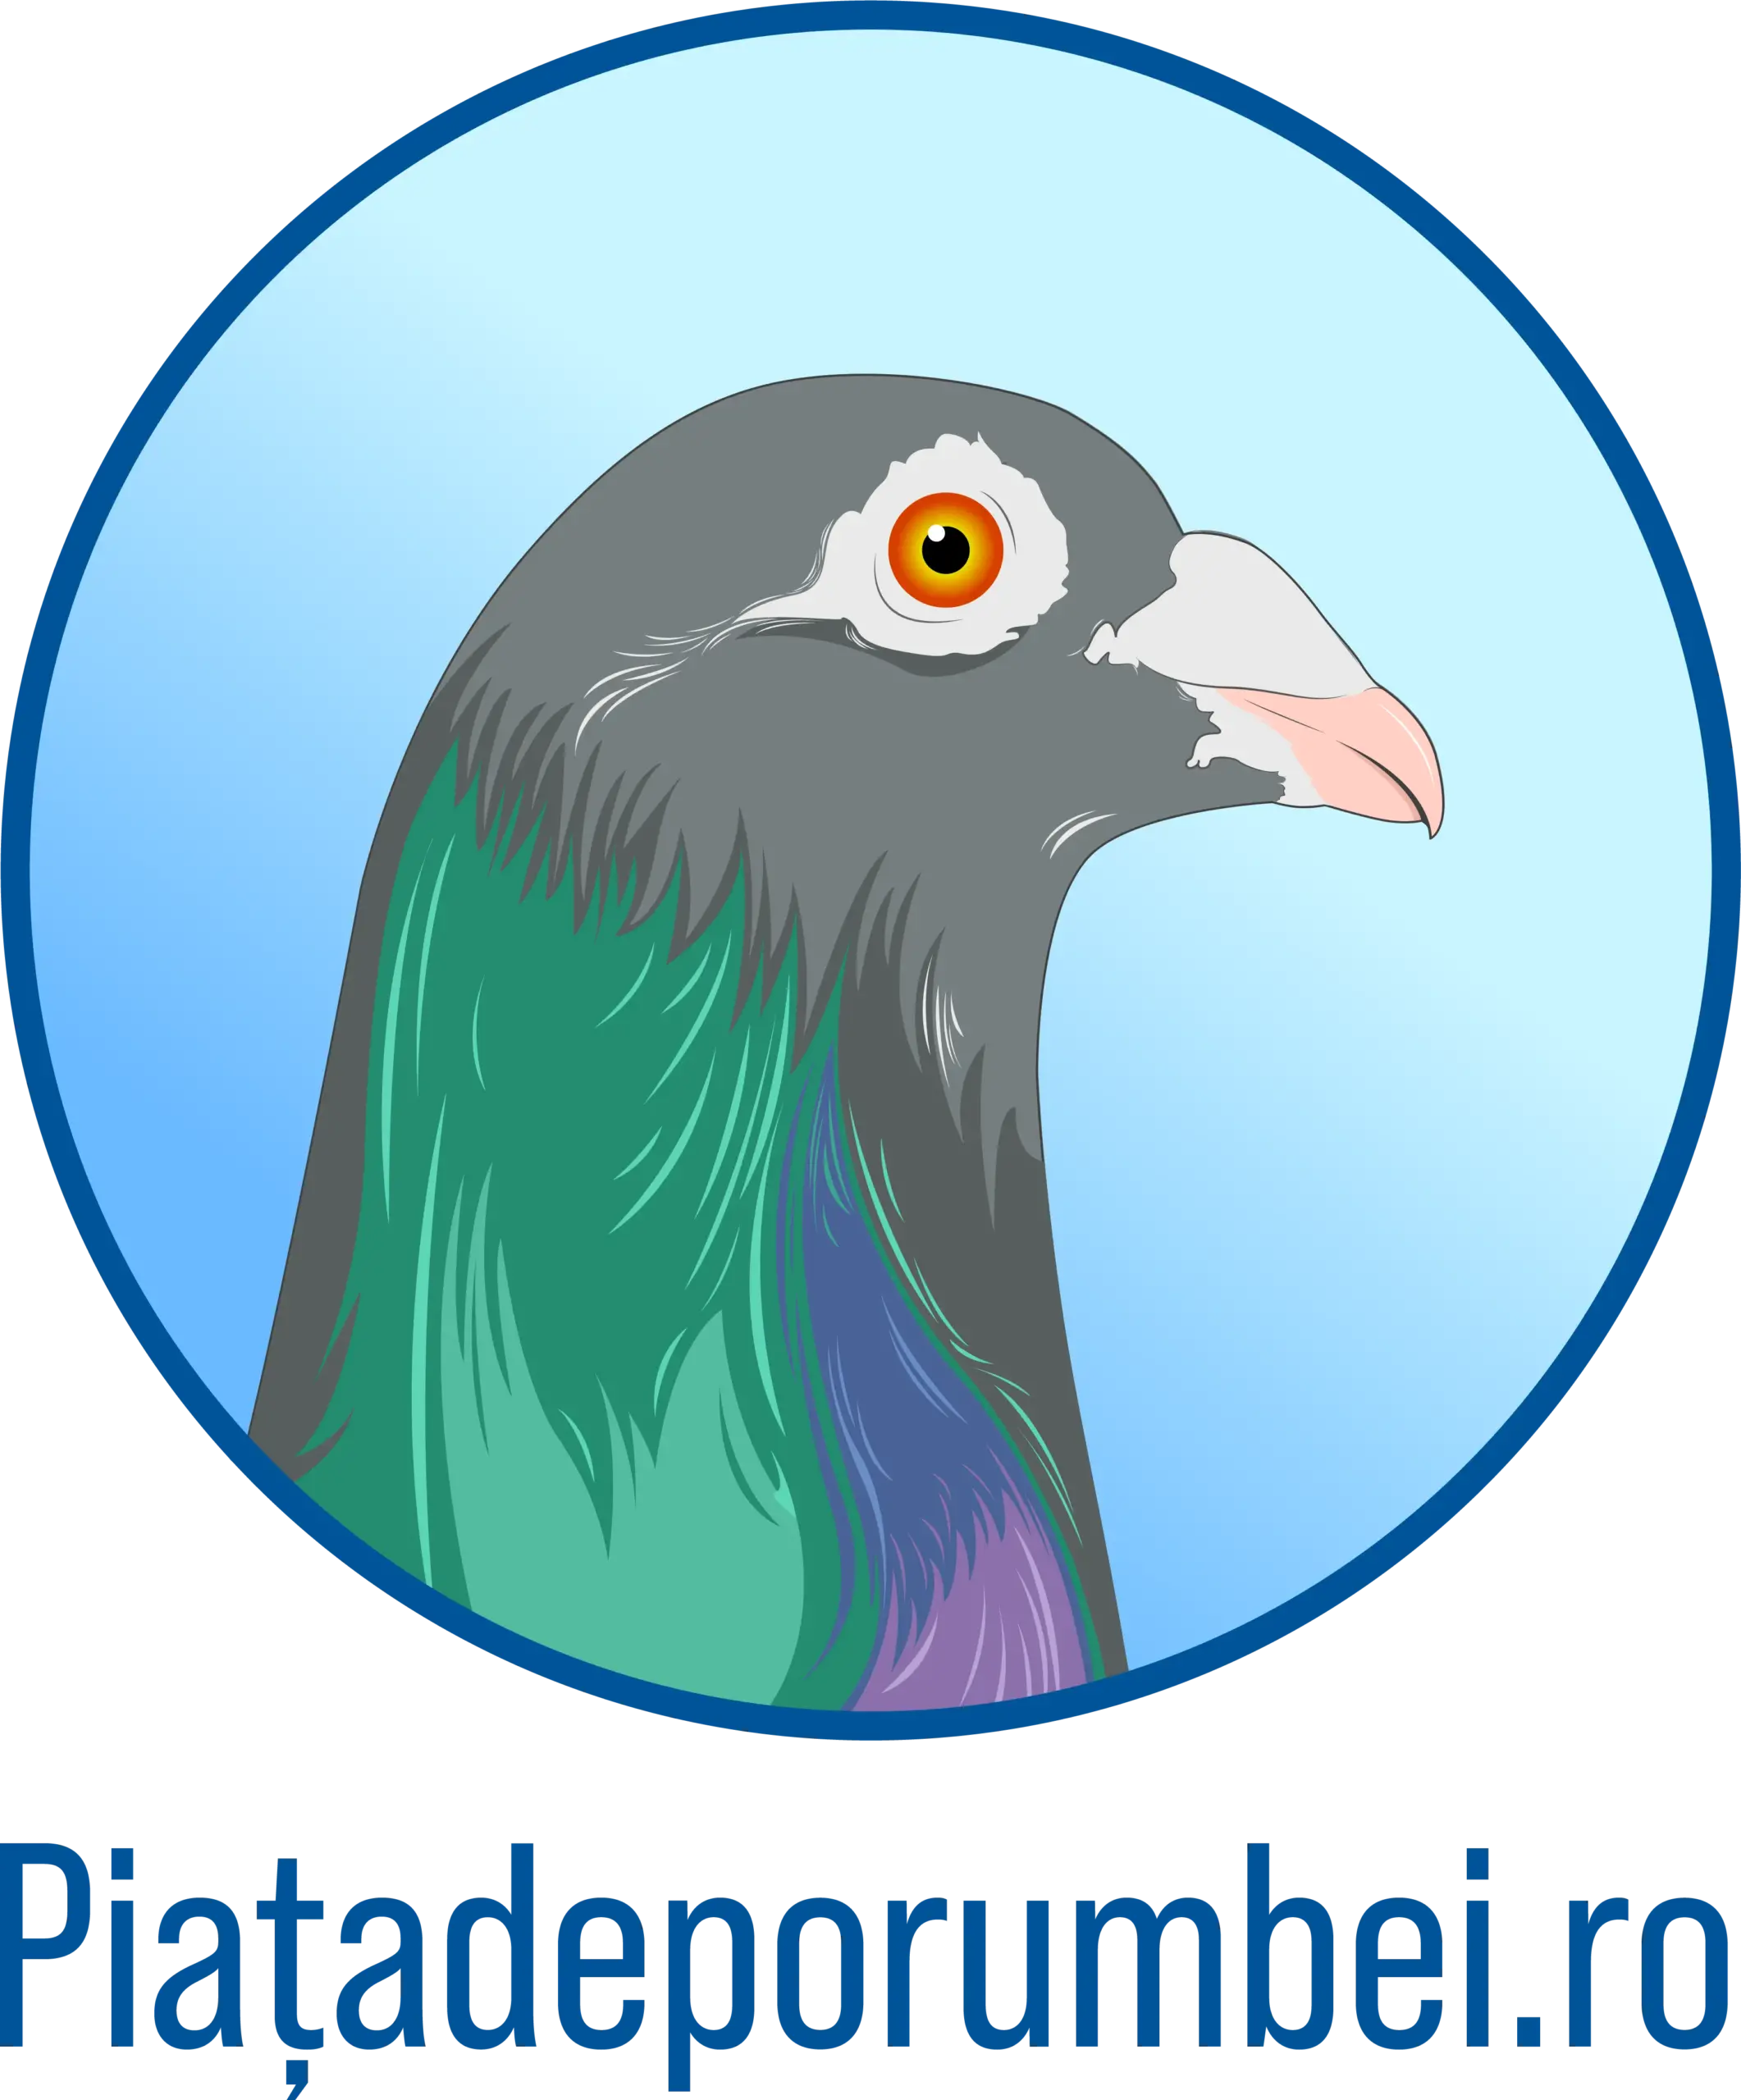 Piatadeporumbei.ro - Romanian Auction House for Racing Pigeons